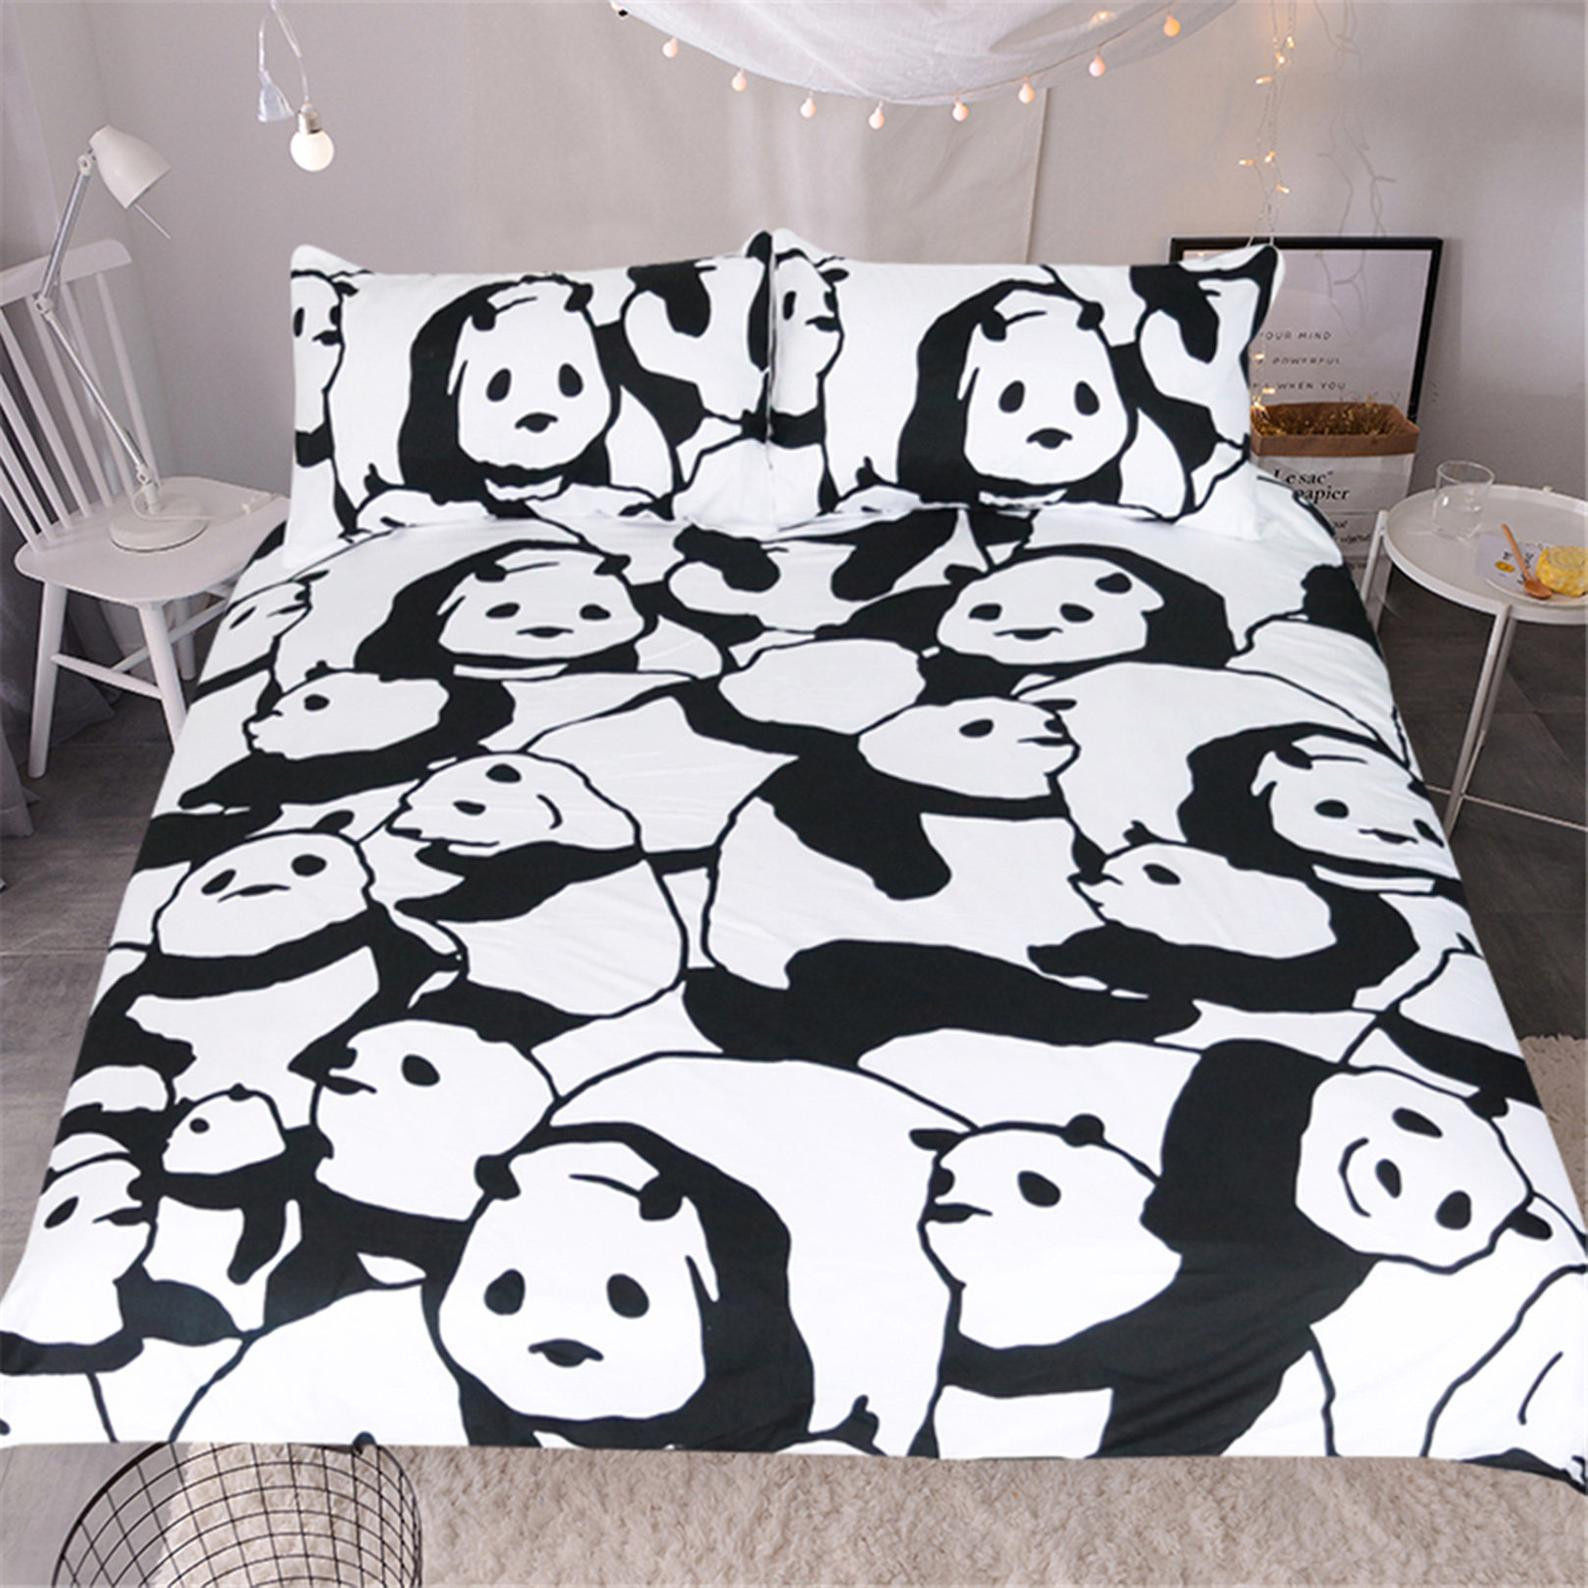 panda print sheet set with duvet cover bedding ensemble cddlw